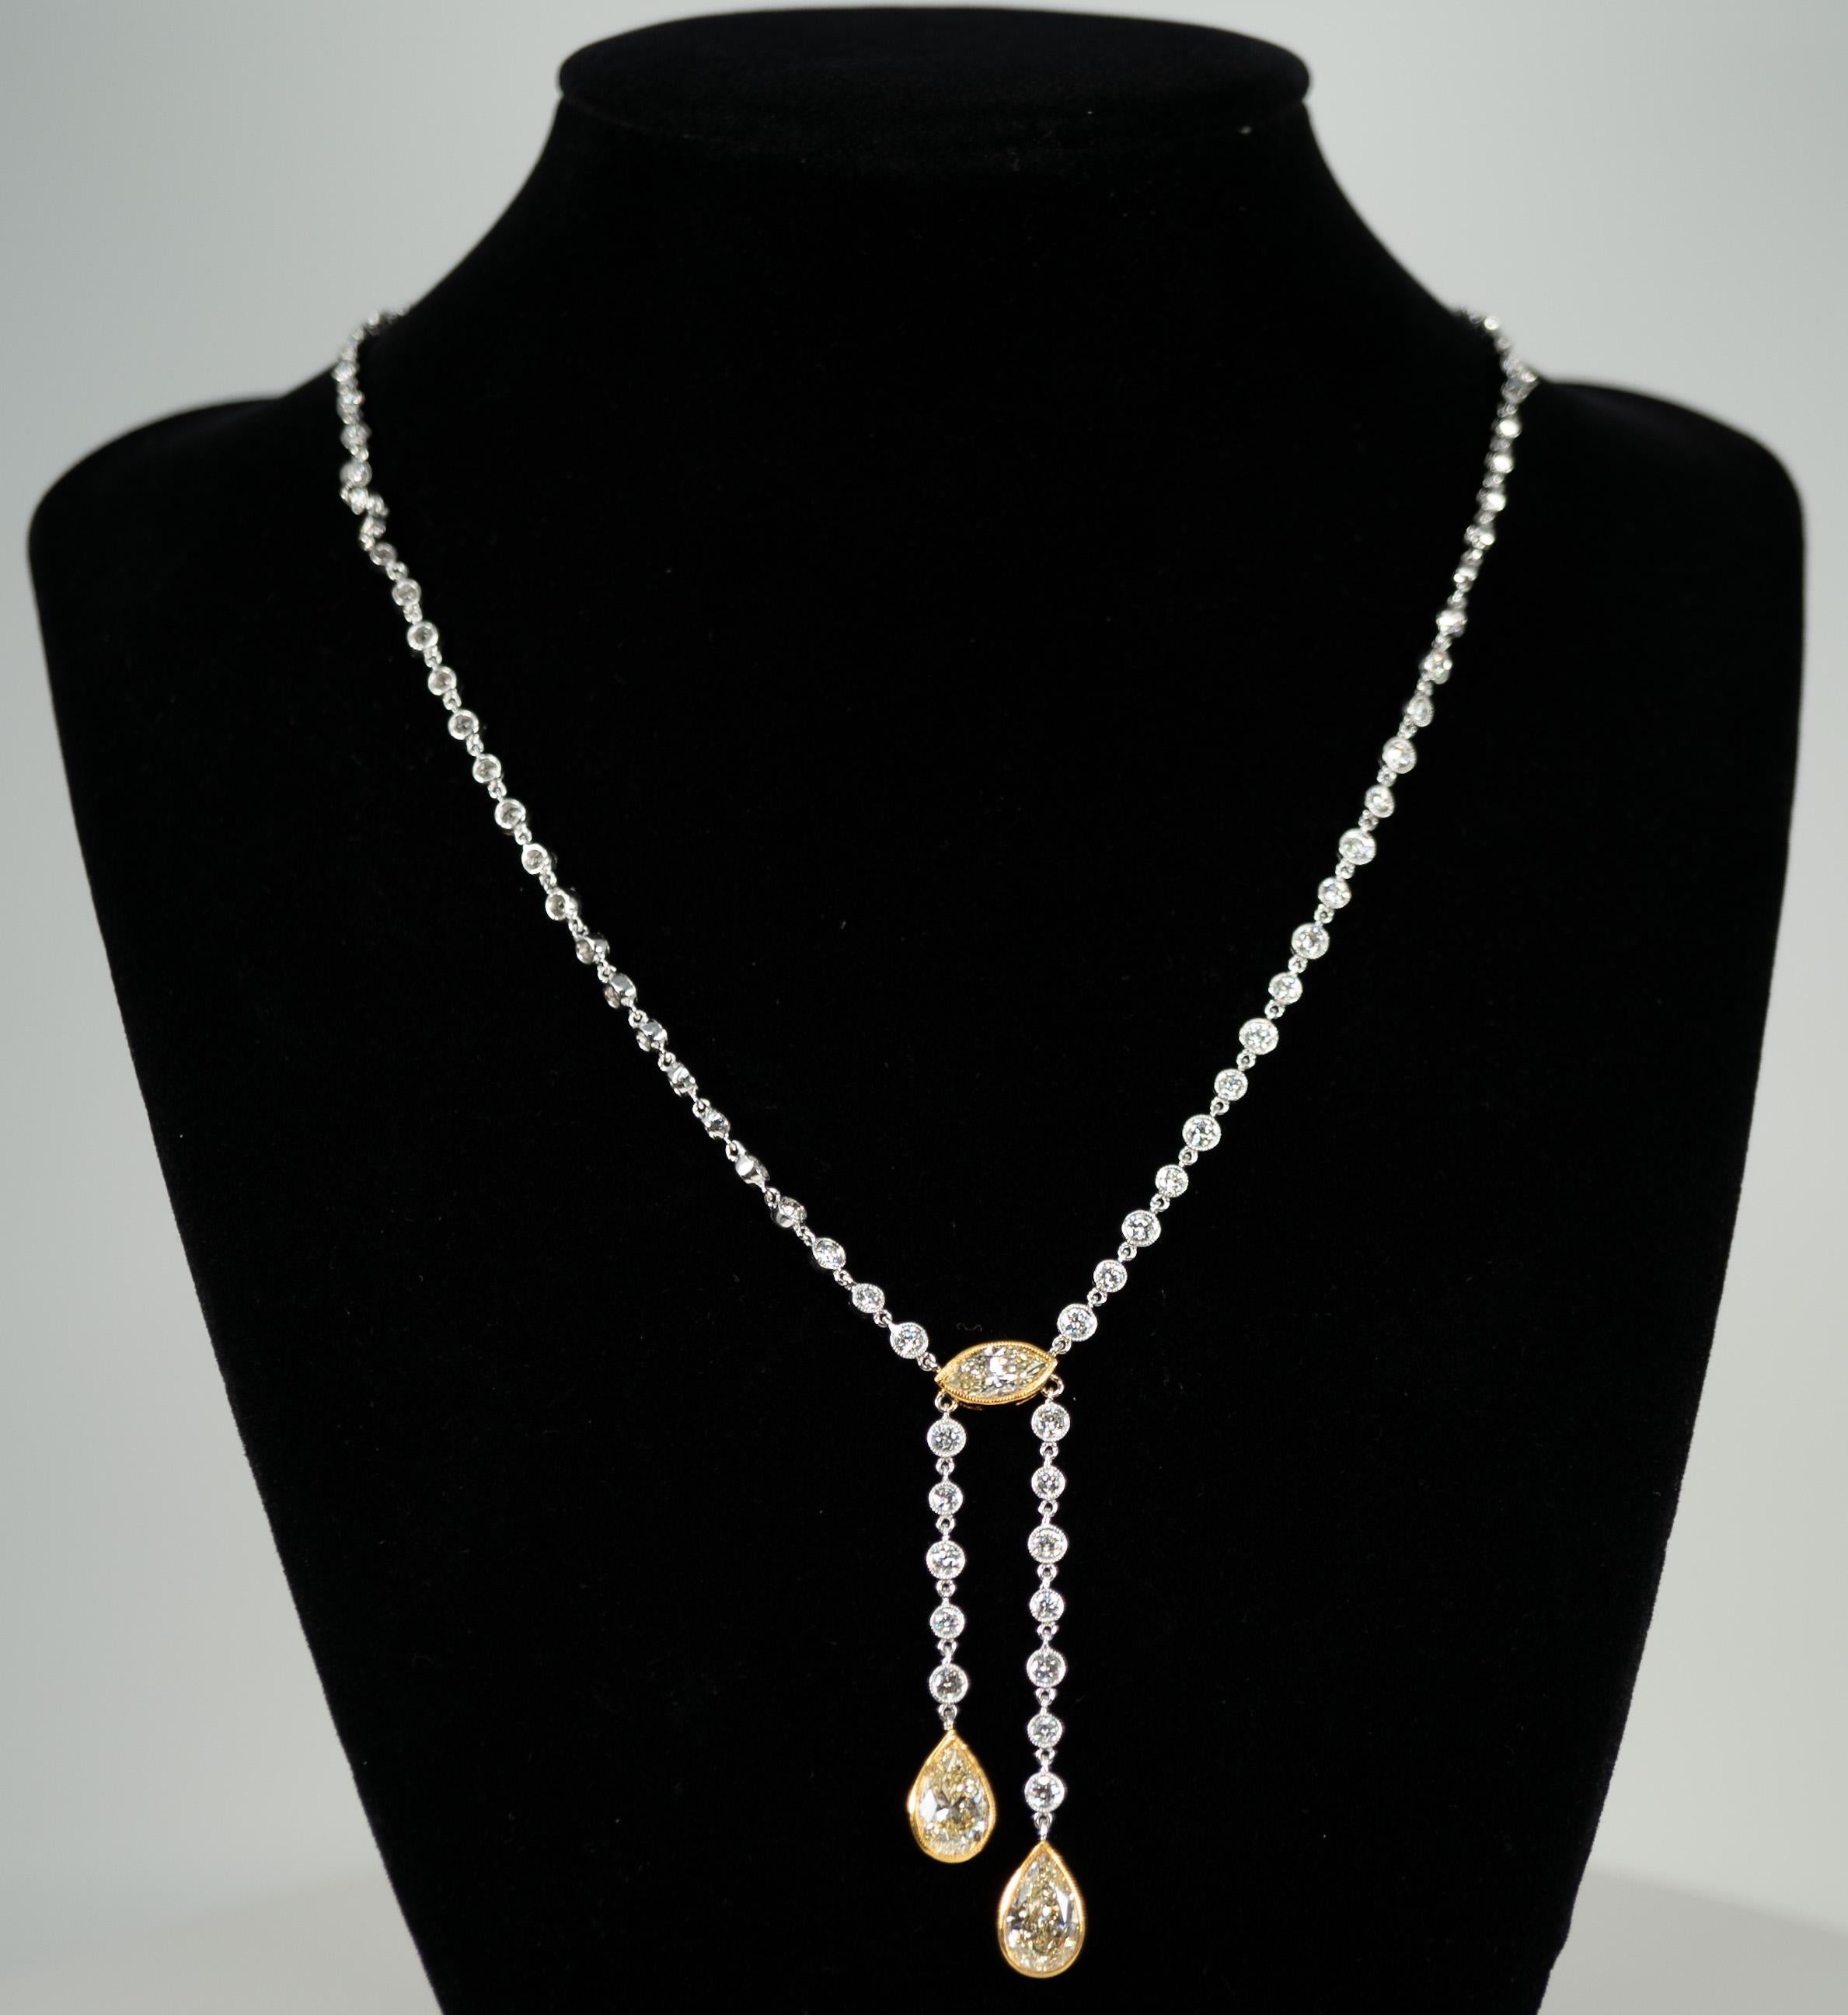 7.25 Carat Diamond Necklace in 18 Karat Gold For Sale 3